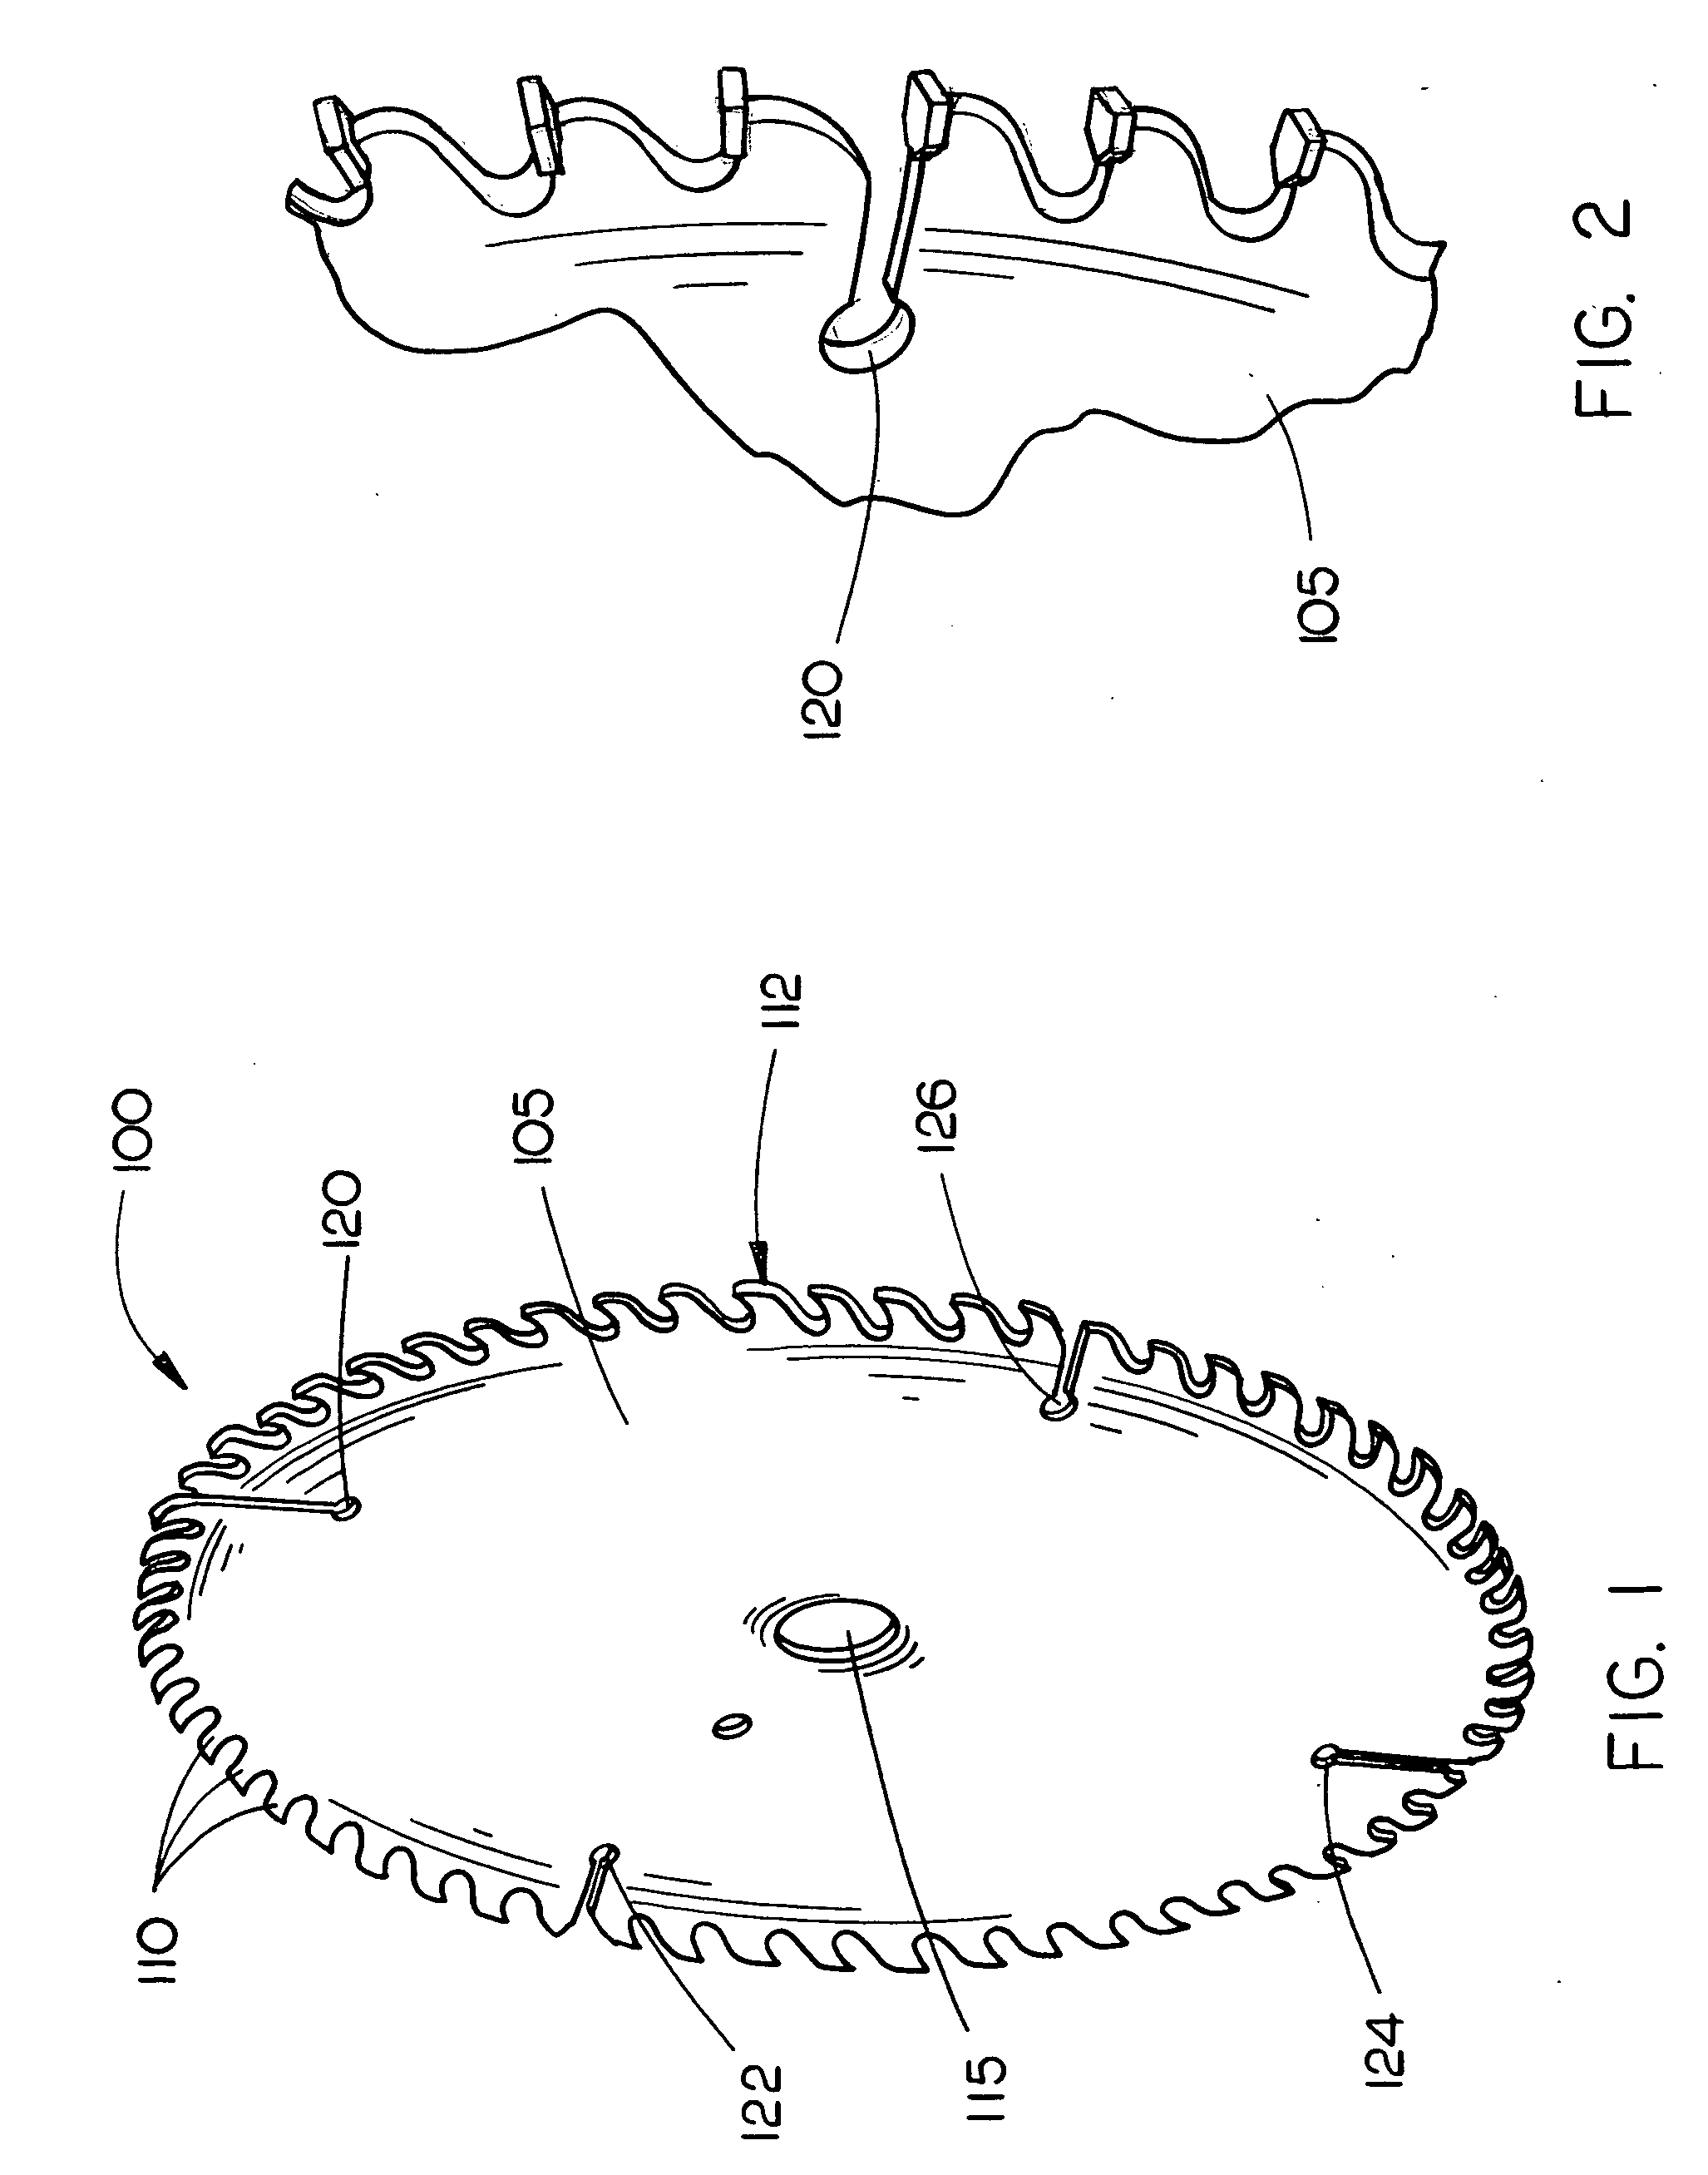 Composite circular saw blade